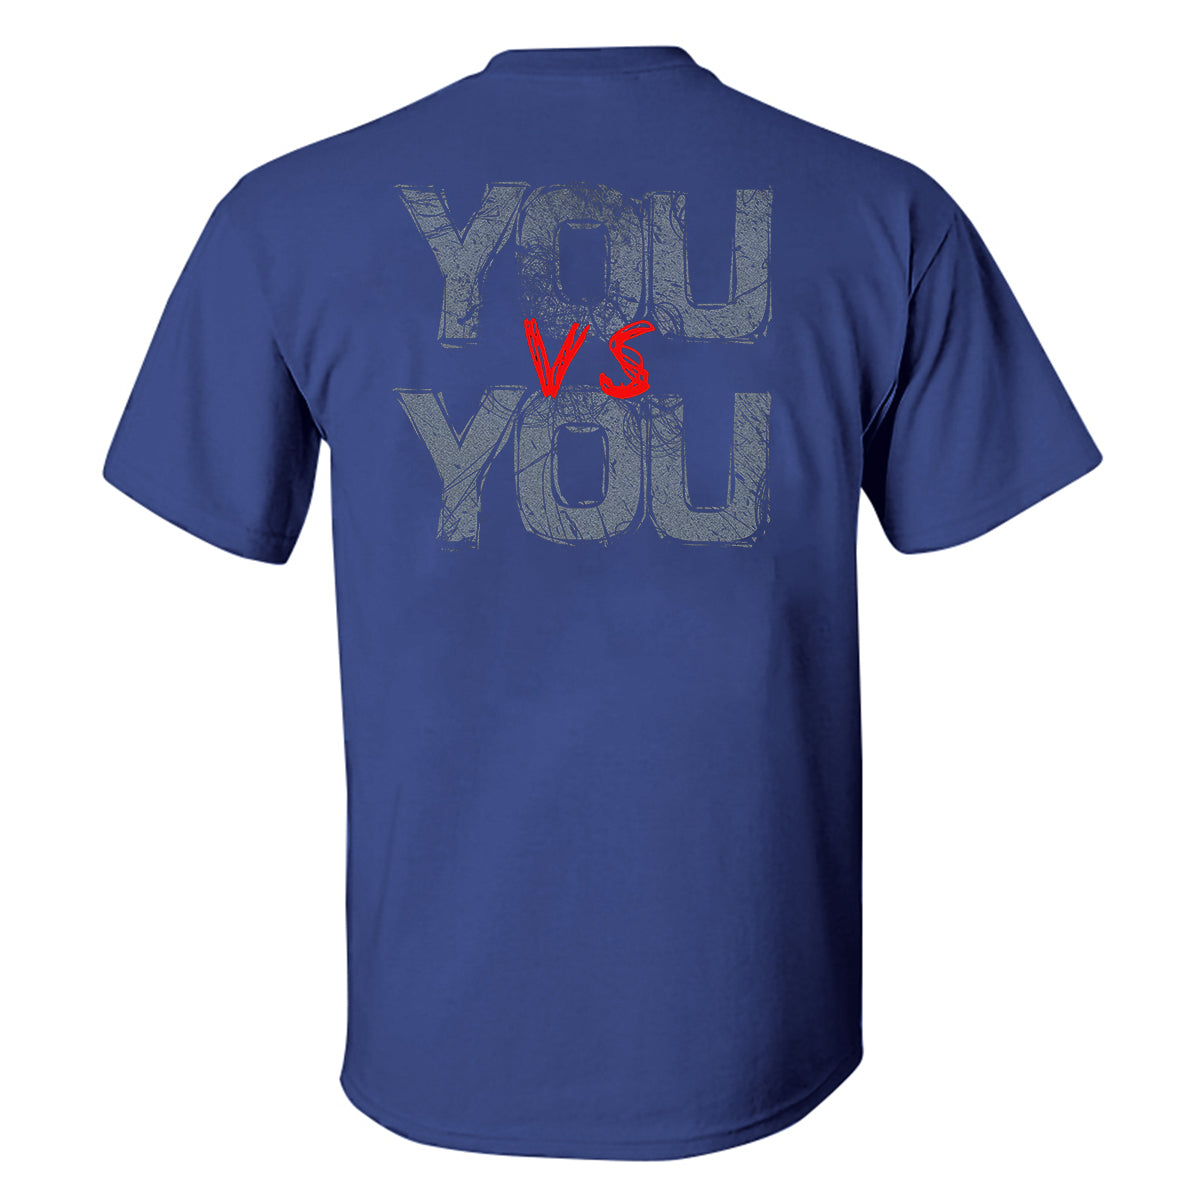 You Vs You Printed T-shirt